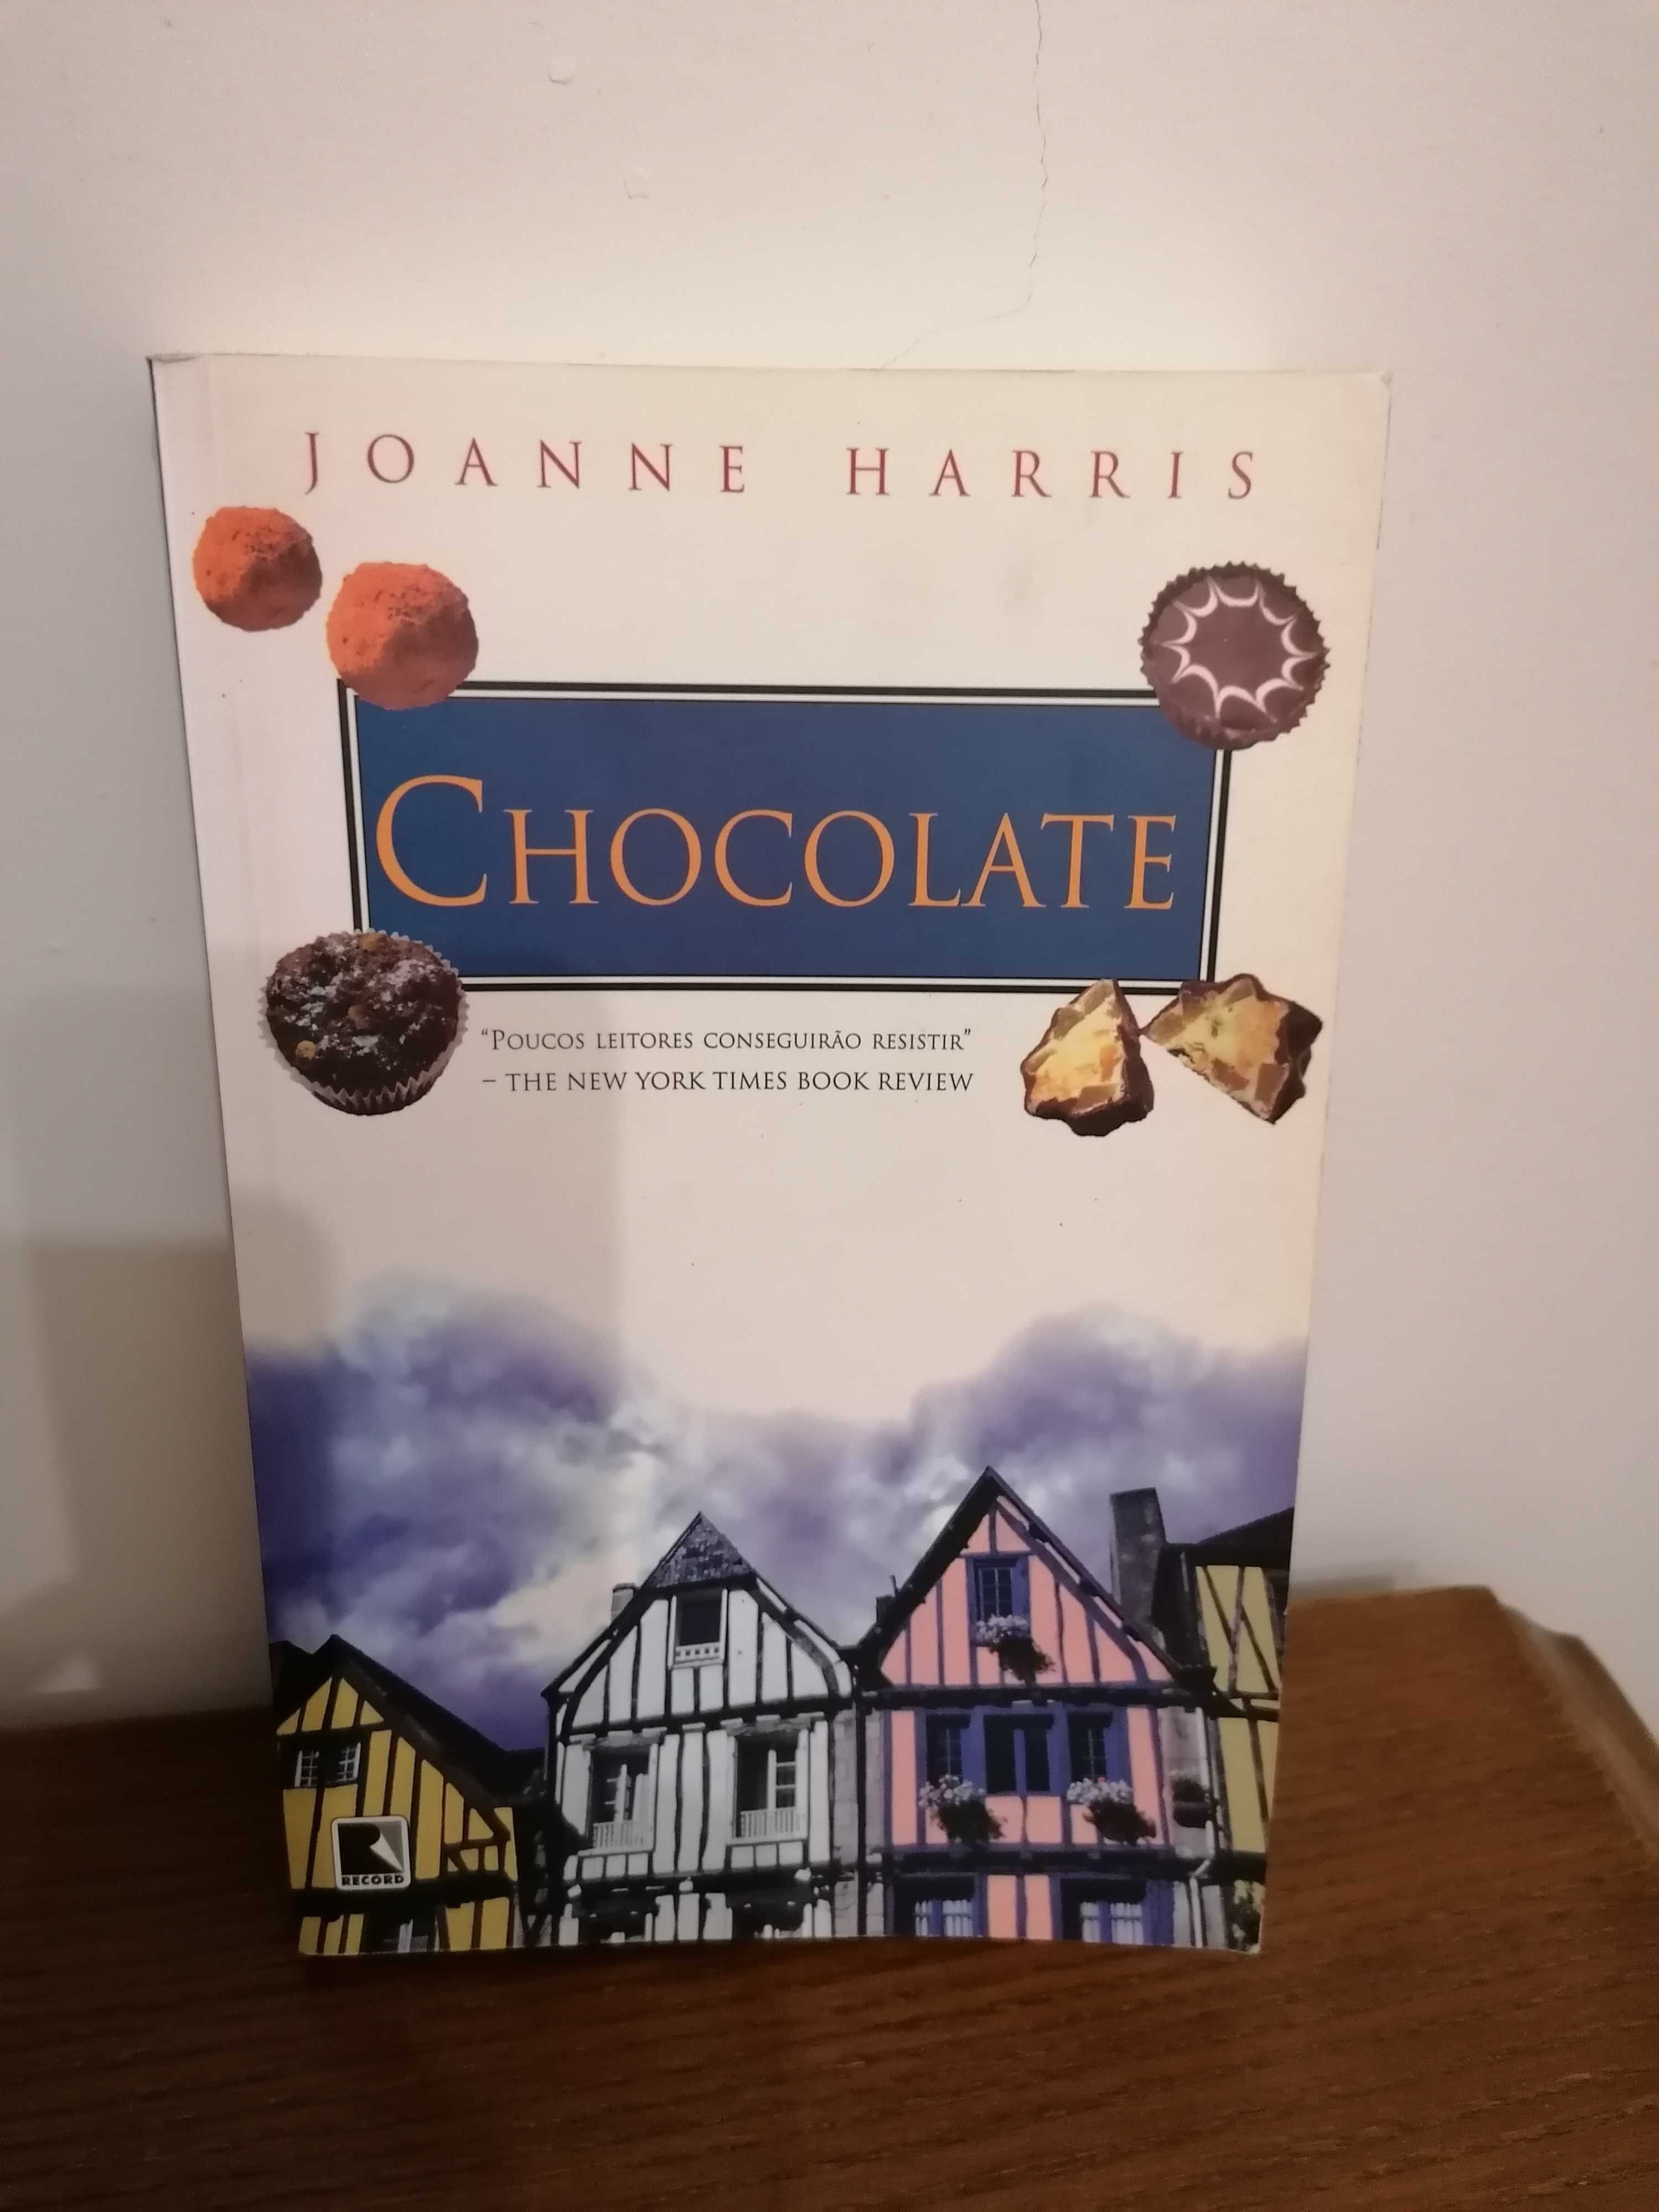 Livro "Chocolate" - Joanne Harris